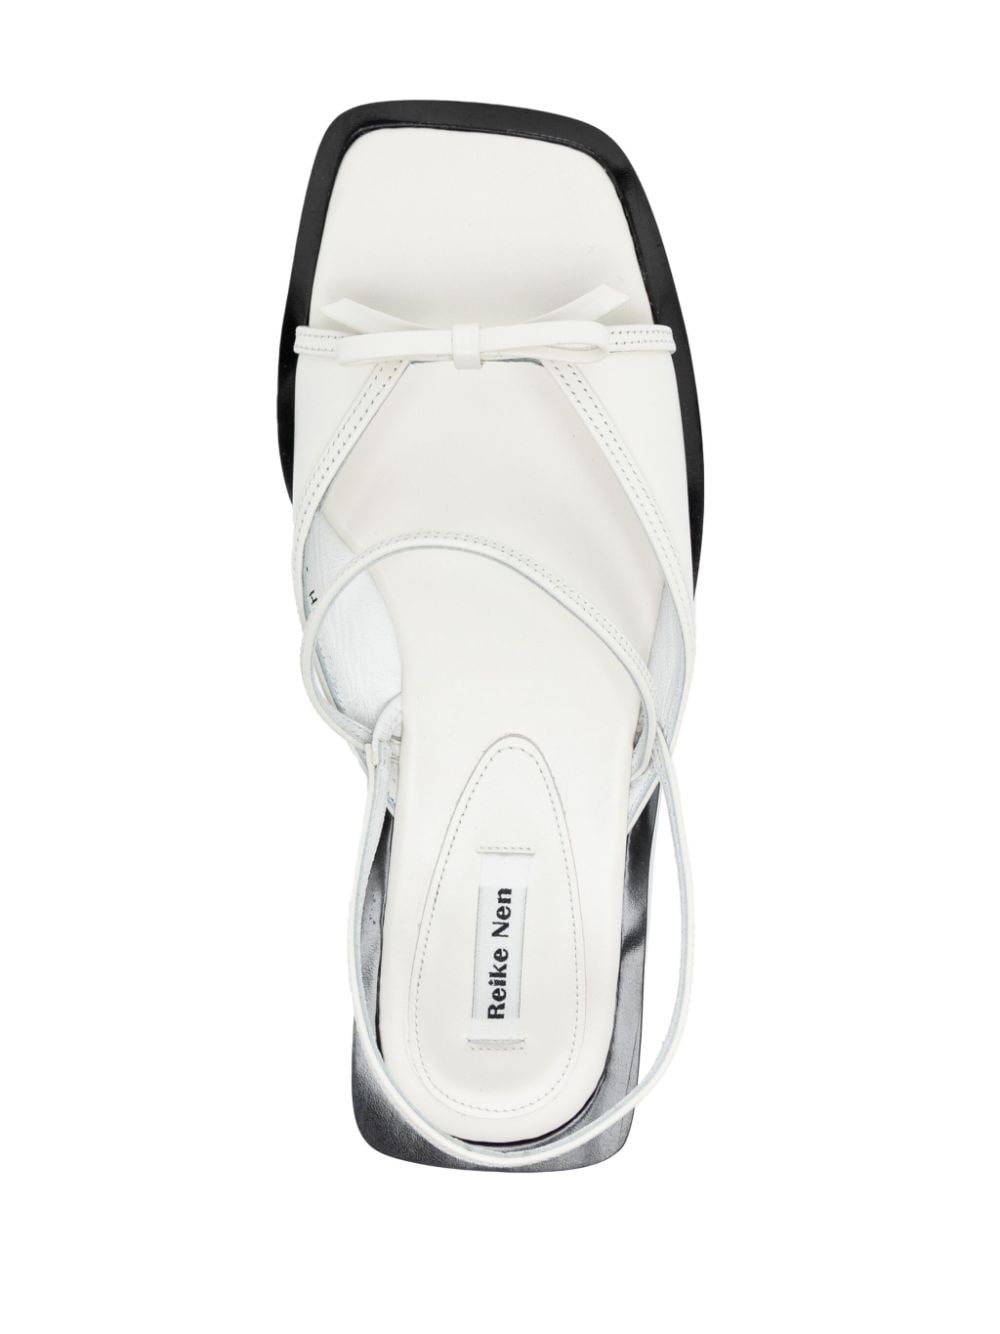 Nabi leather sandals - 4